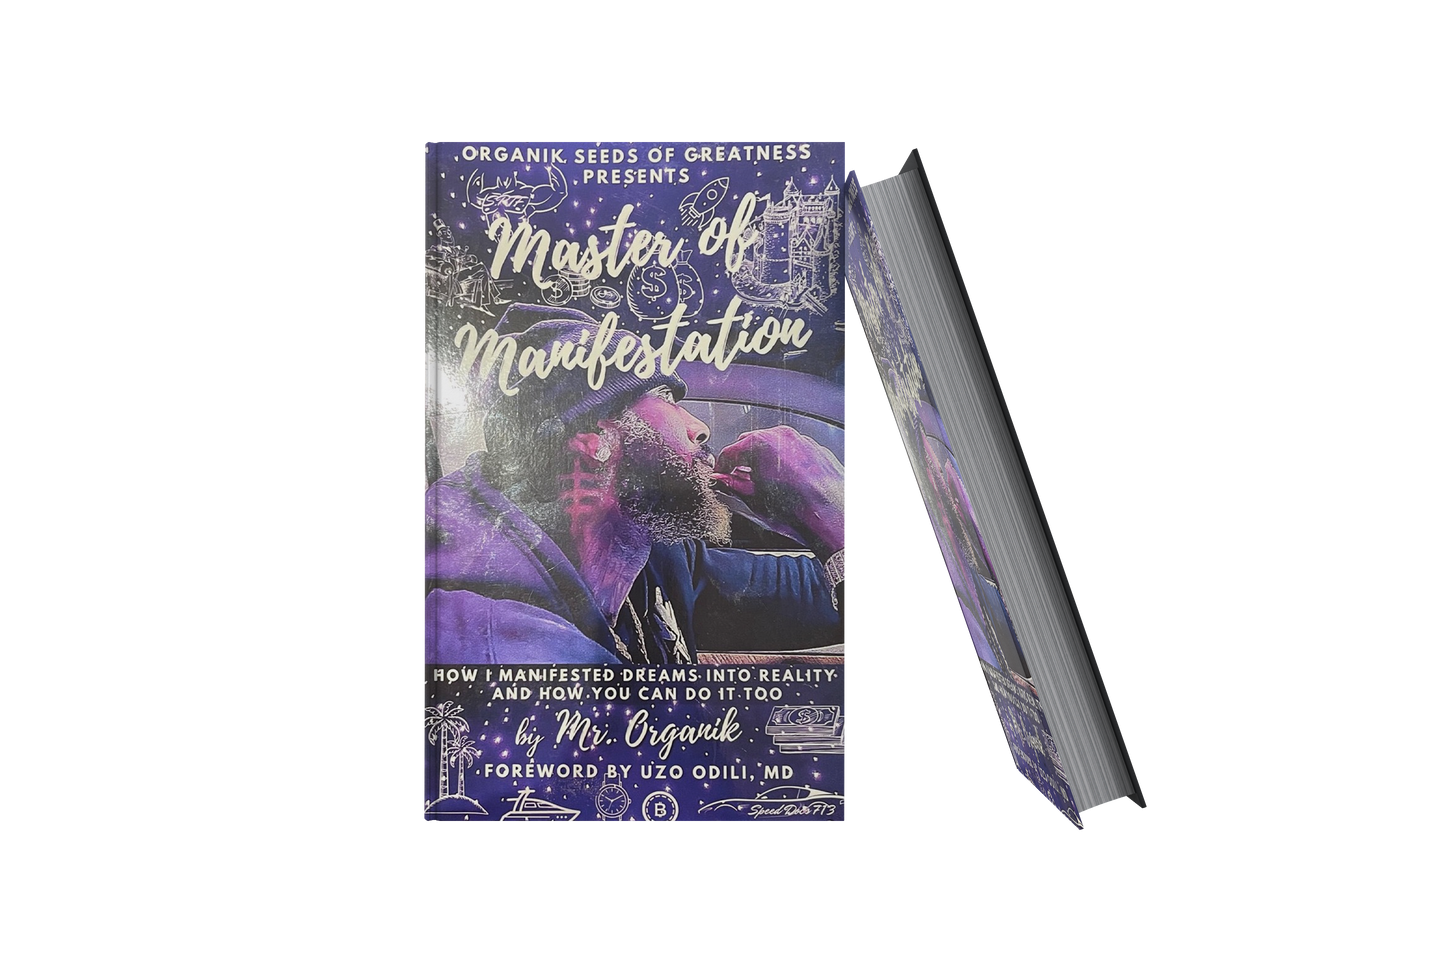 Organik Lyfestyle - "Master Of Manifestation" Book Signed Copy